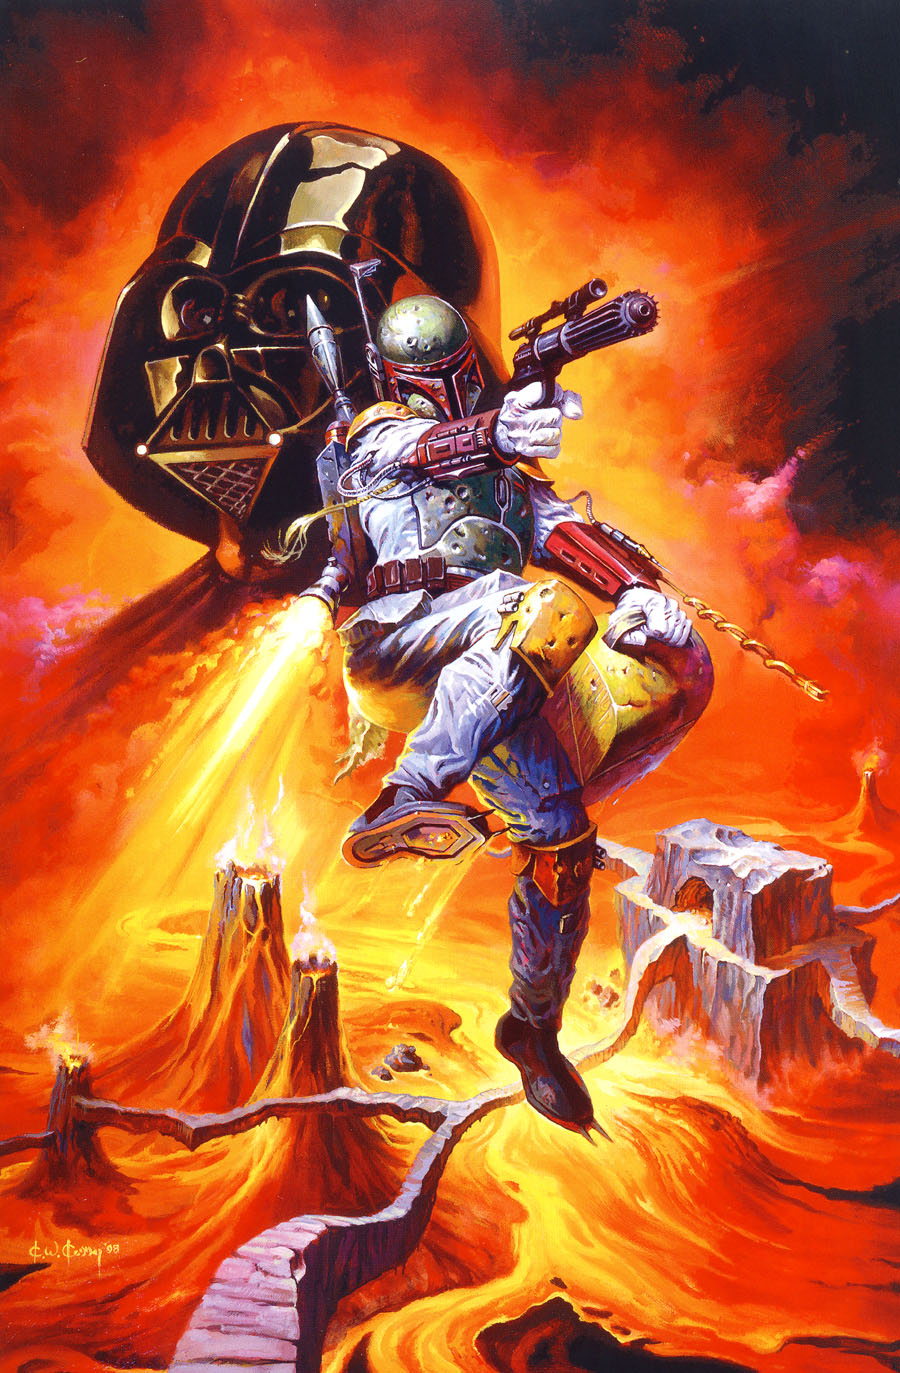 Plik:Enemy of the Empire 1 cover art.jpg